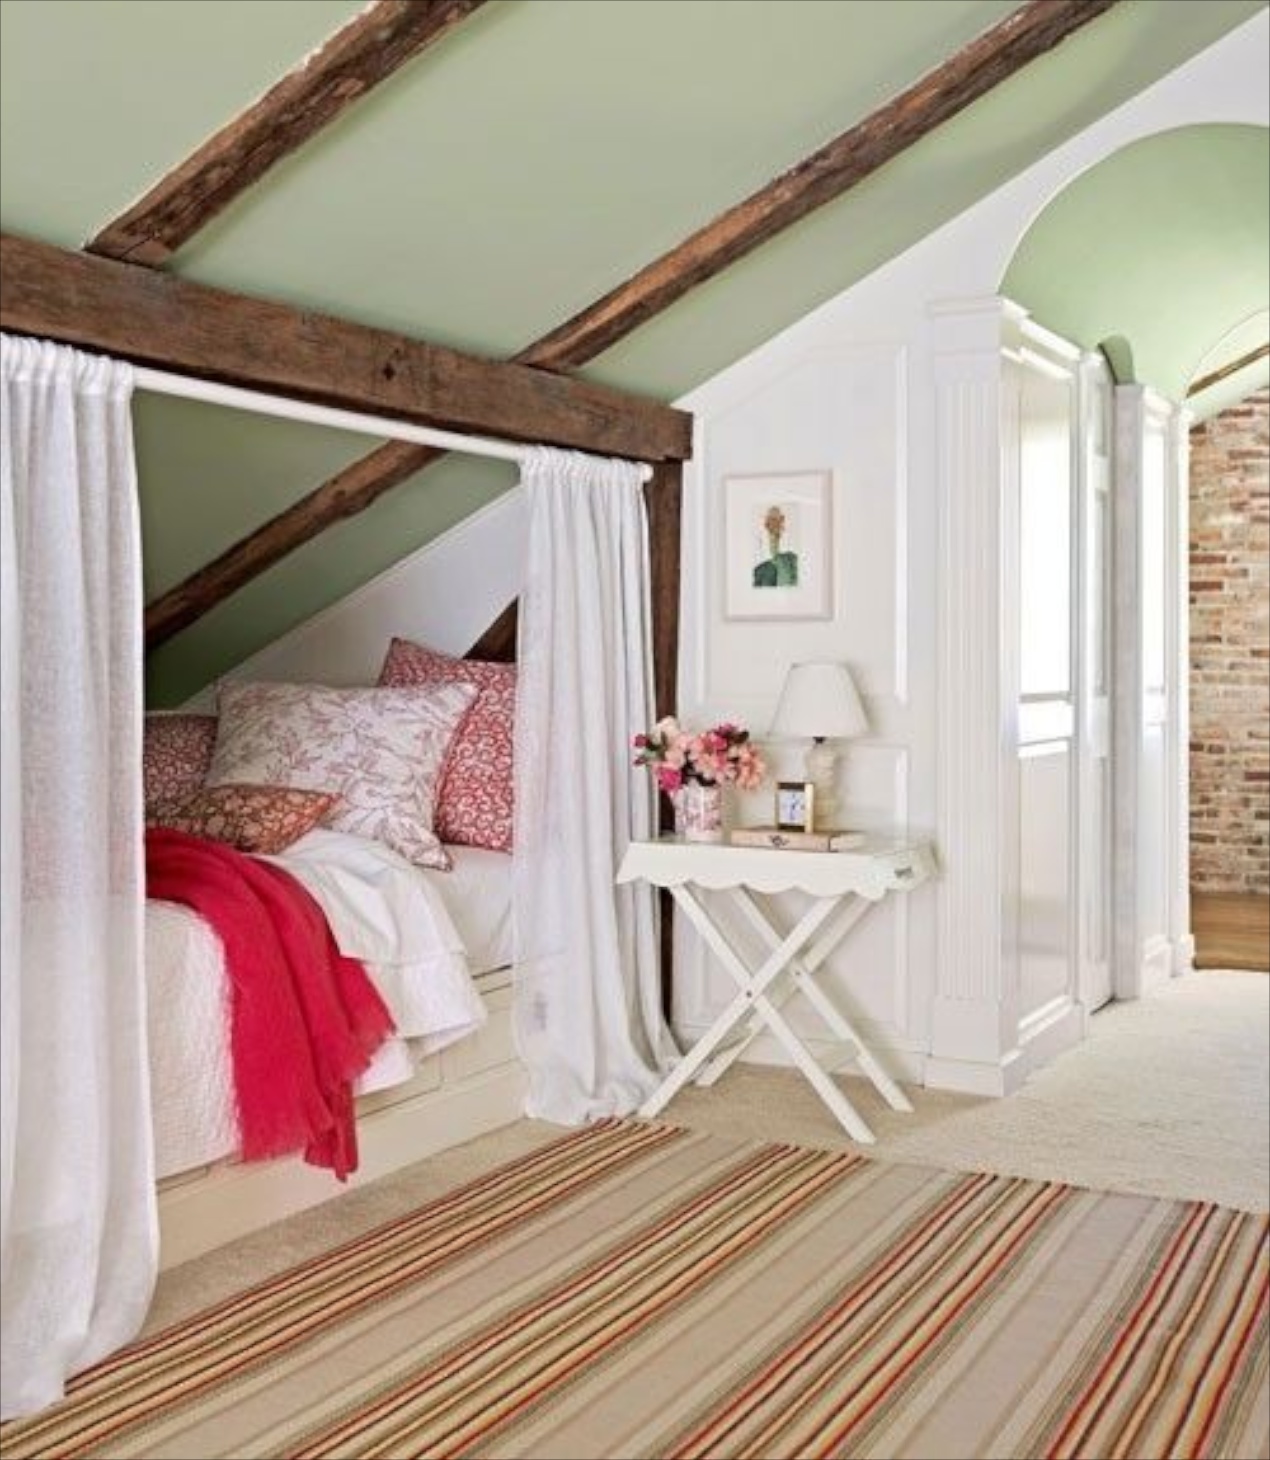 New Pinterest Attic Bedroom Ideas with Simple Decor